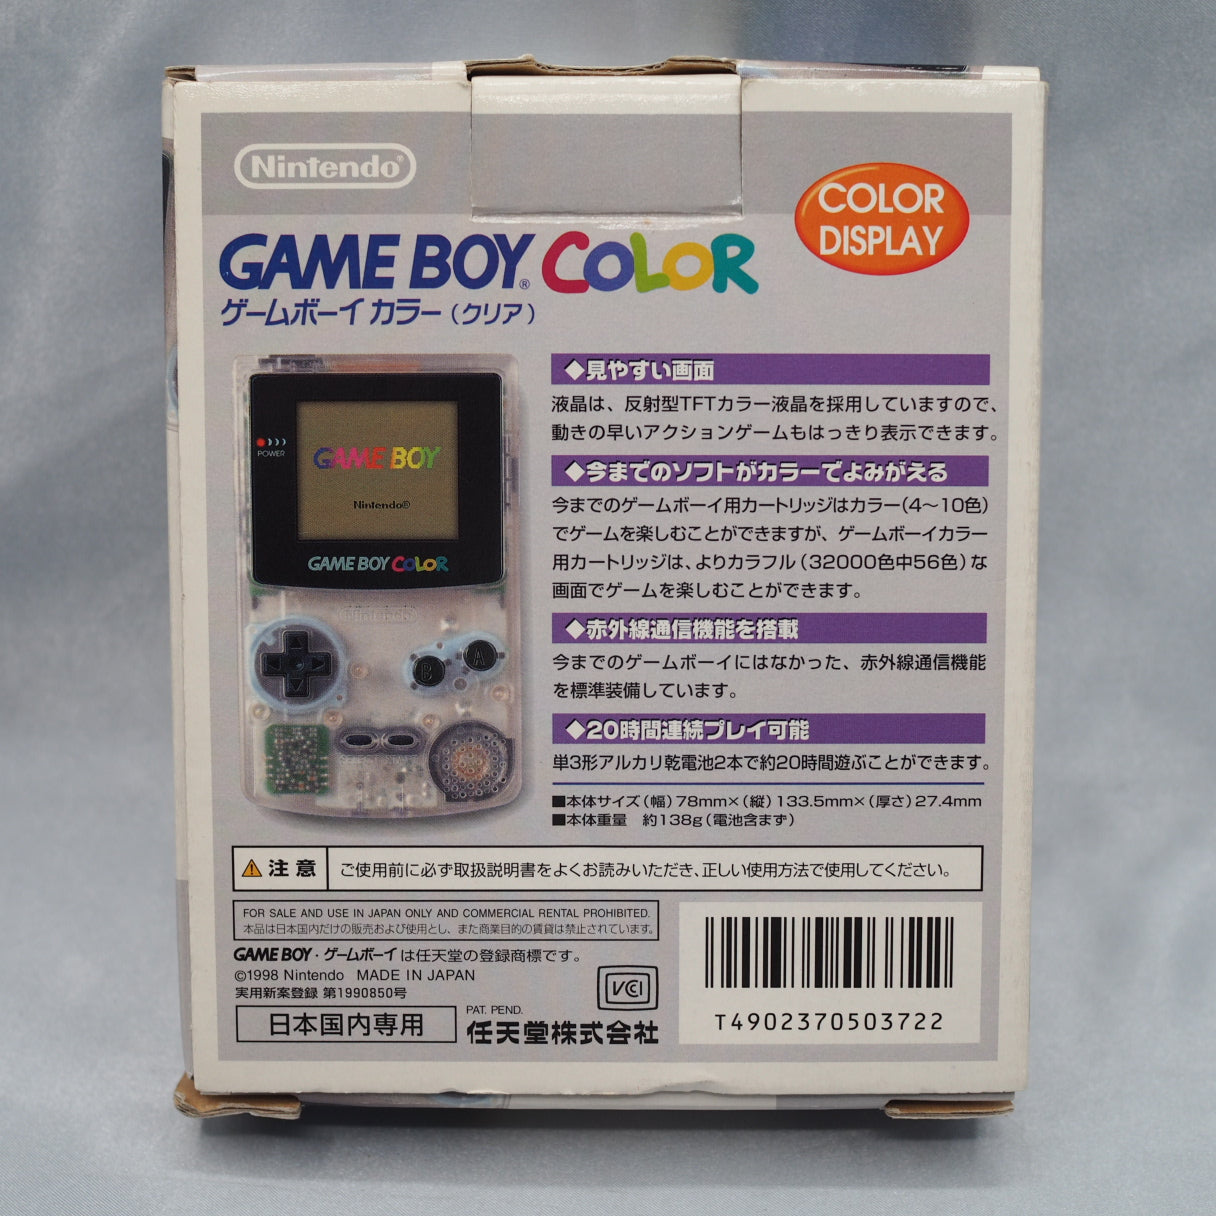 Nintendo GAMEBOY COLOR Console CGB-001 [Clear]